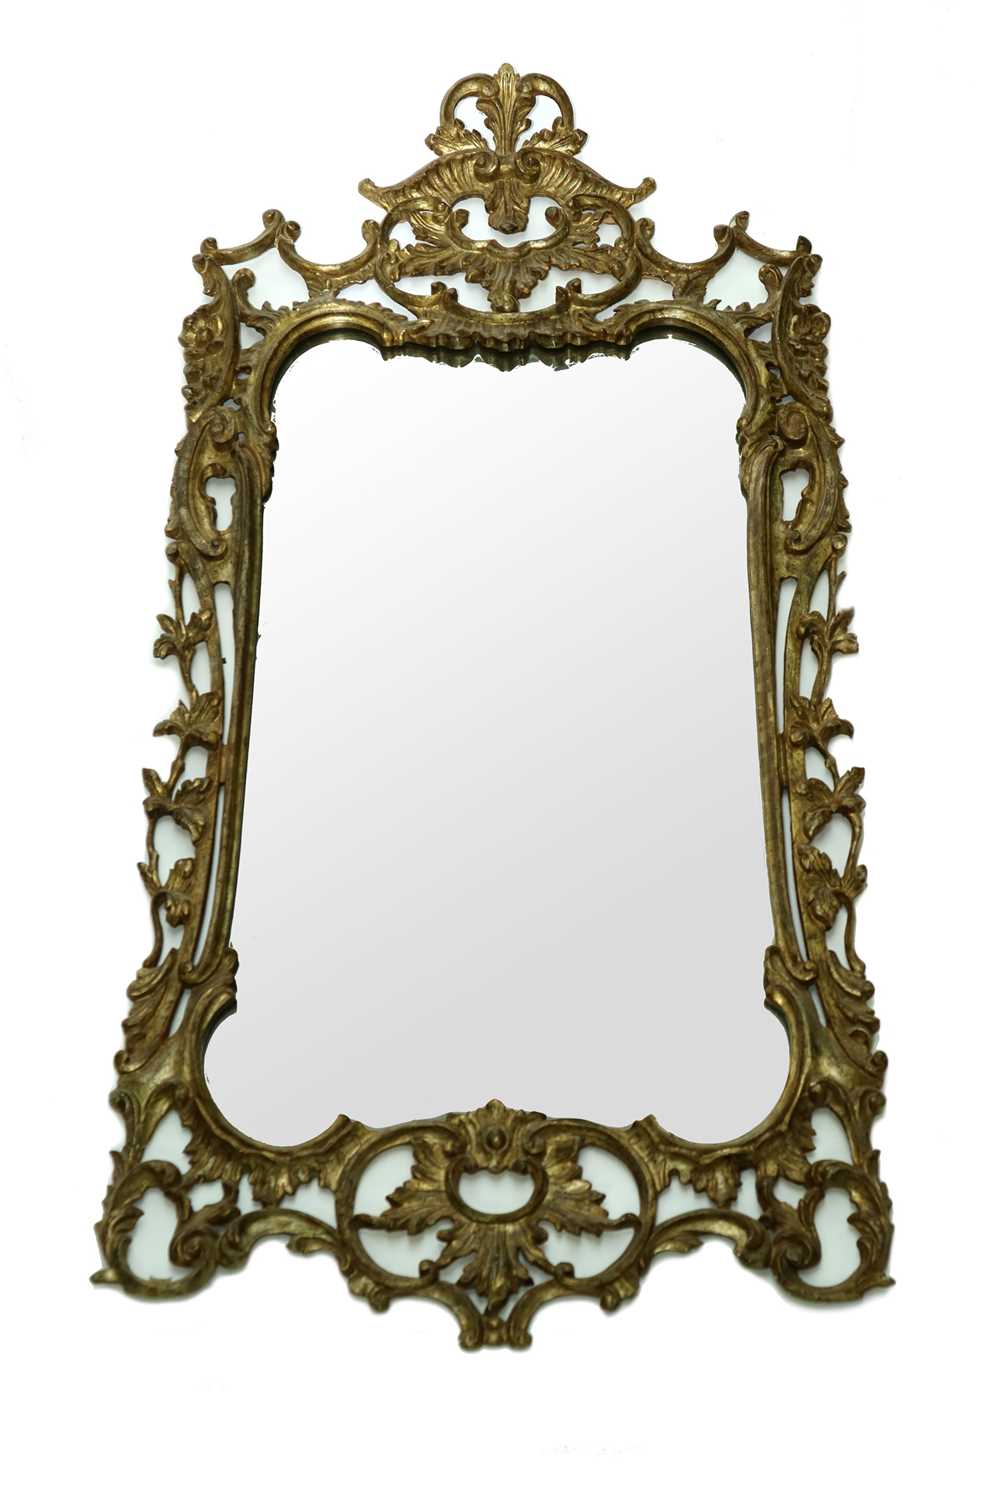 Lot 458 - A Rococo style pier gilt-wood wall mirror, 19th century